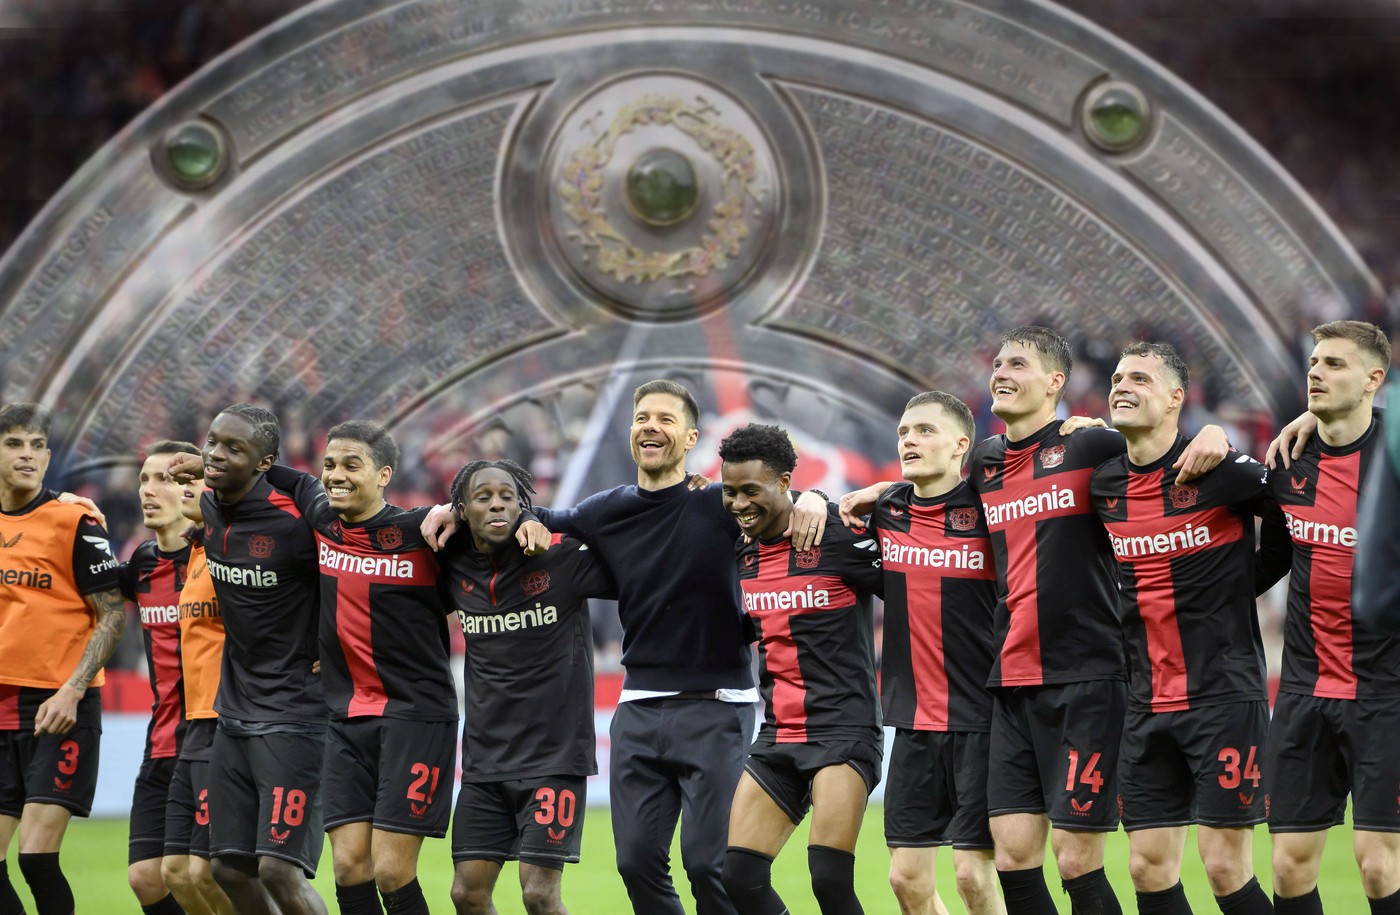 Bayer Leverkusen - Werder Bremen, LIVE VIDEO, 18:30, Digi Sport 4. ”Farmaciștii” pot câștiga primul titlu din istorie